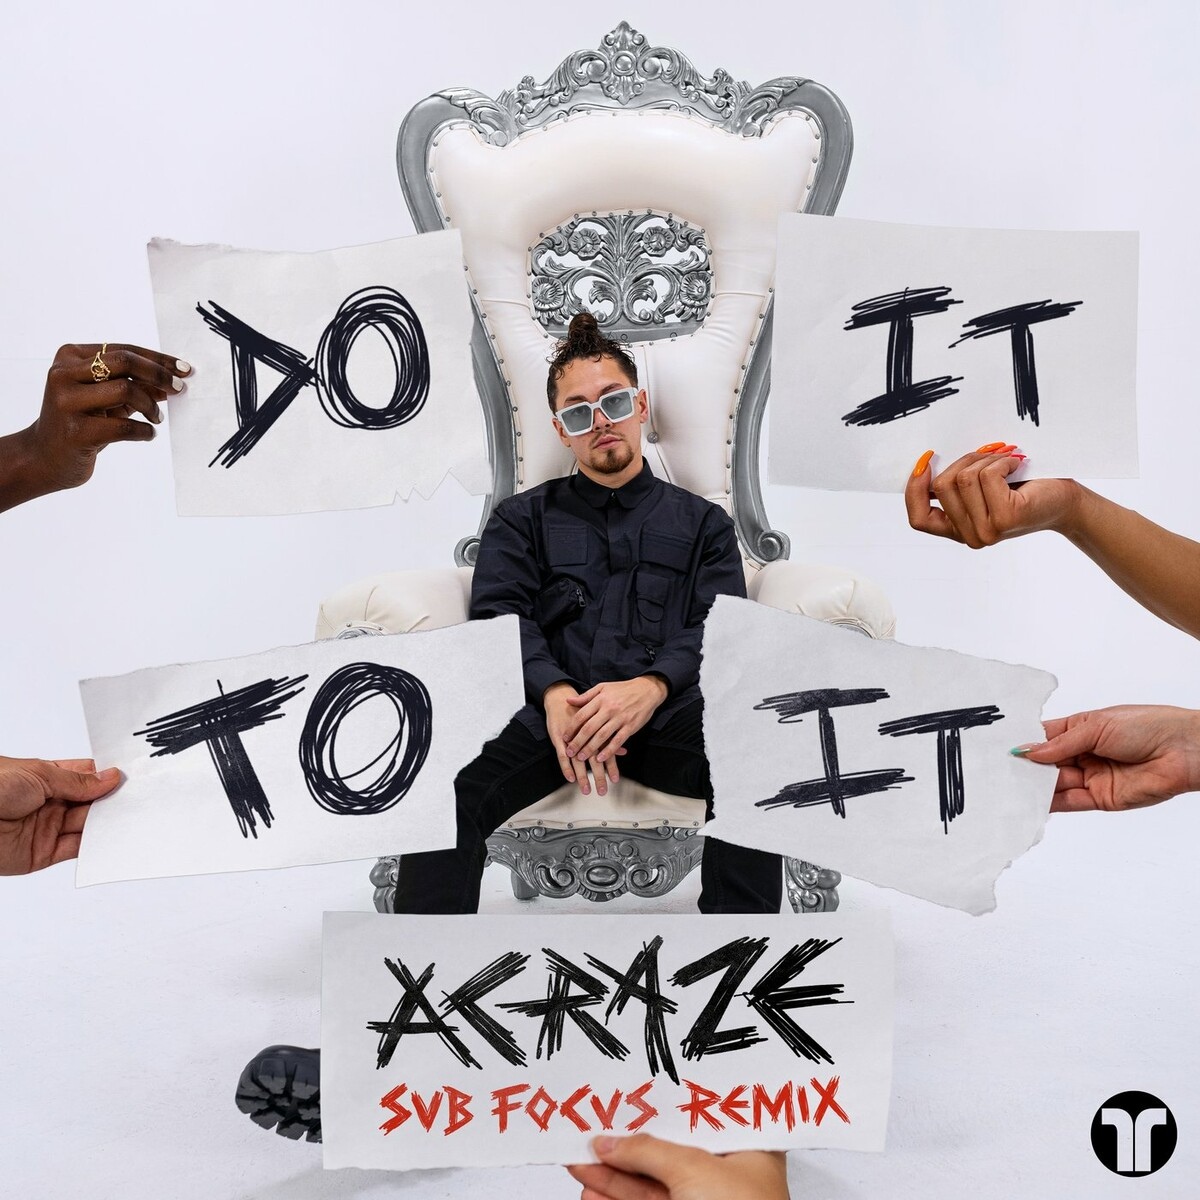 Acraze & Cherish - Do It To It (Sub Focus Extended Remix)